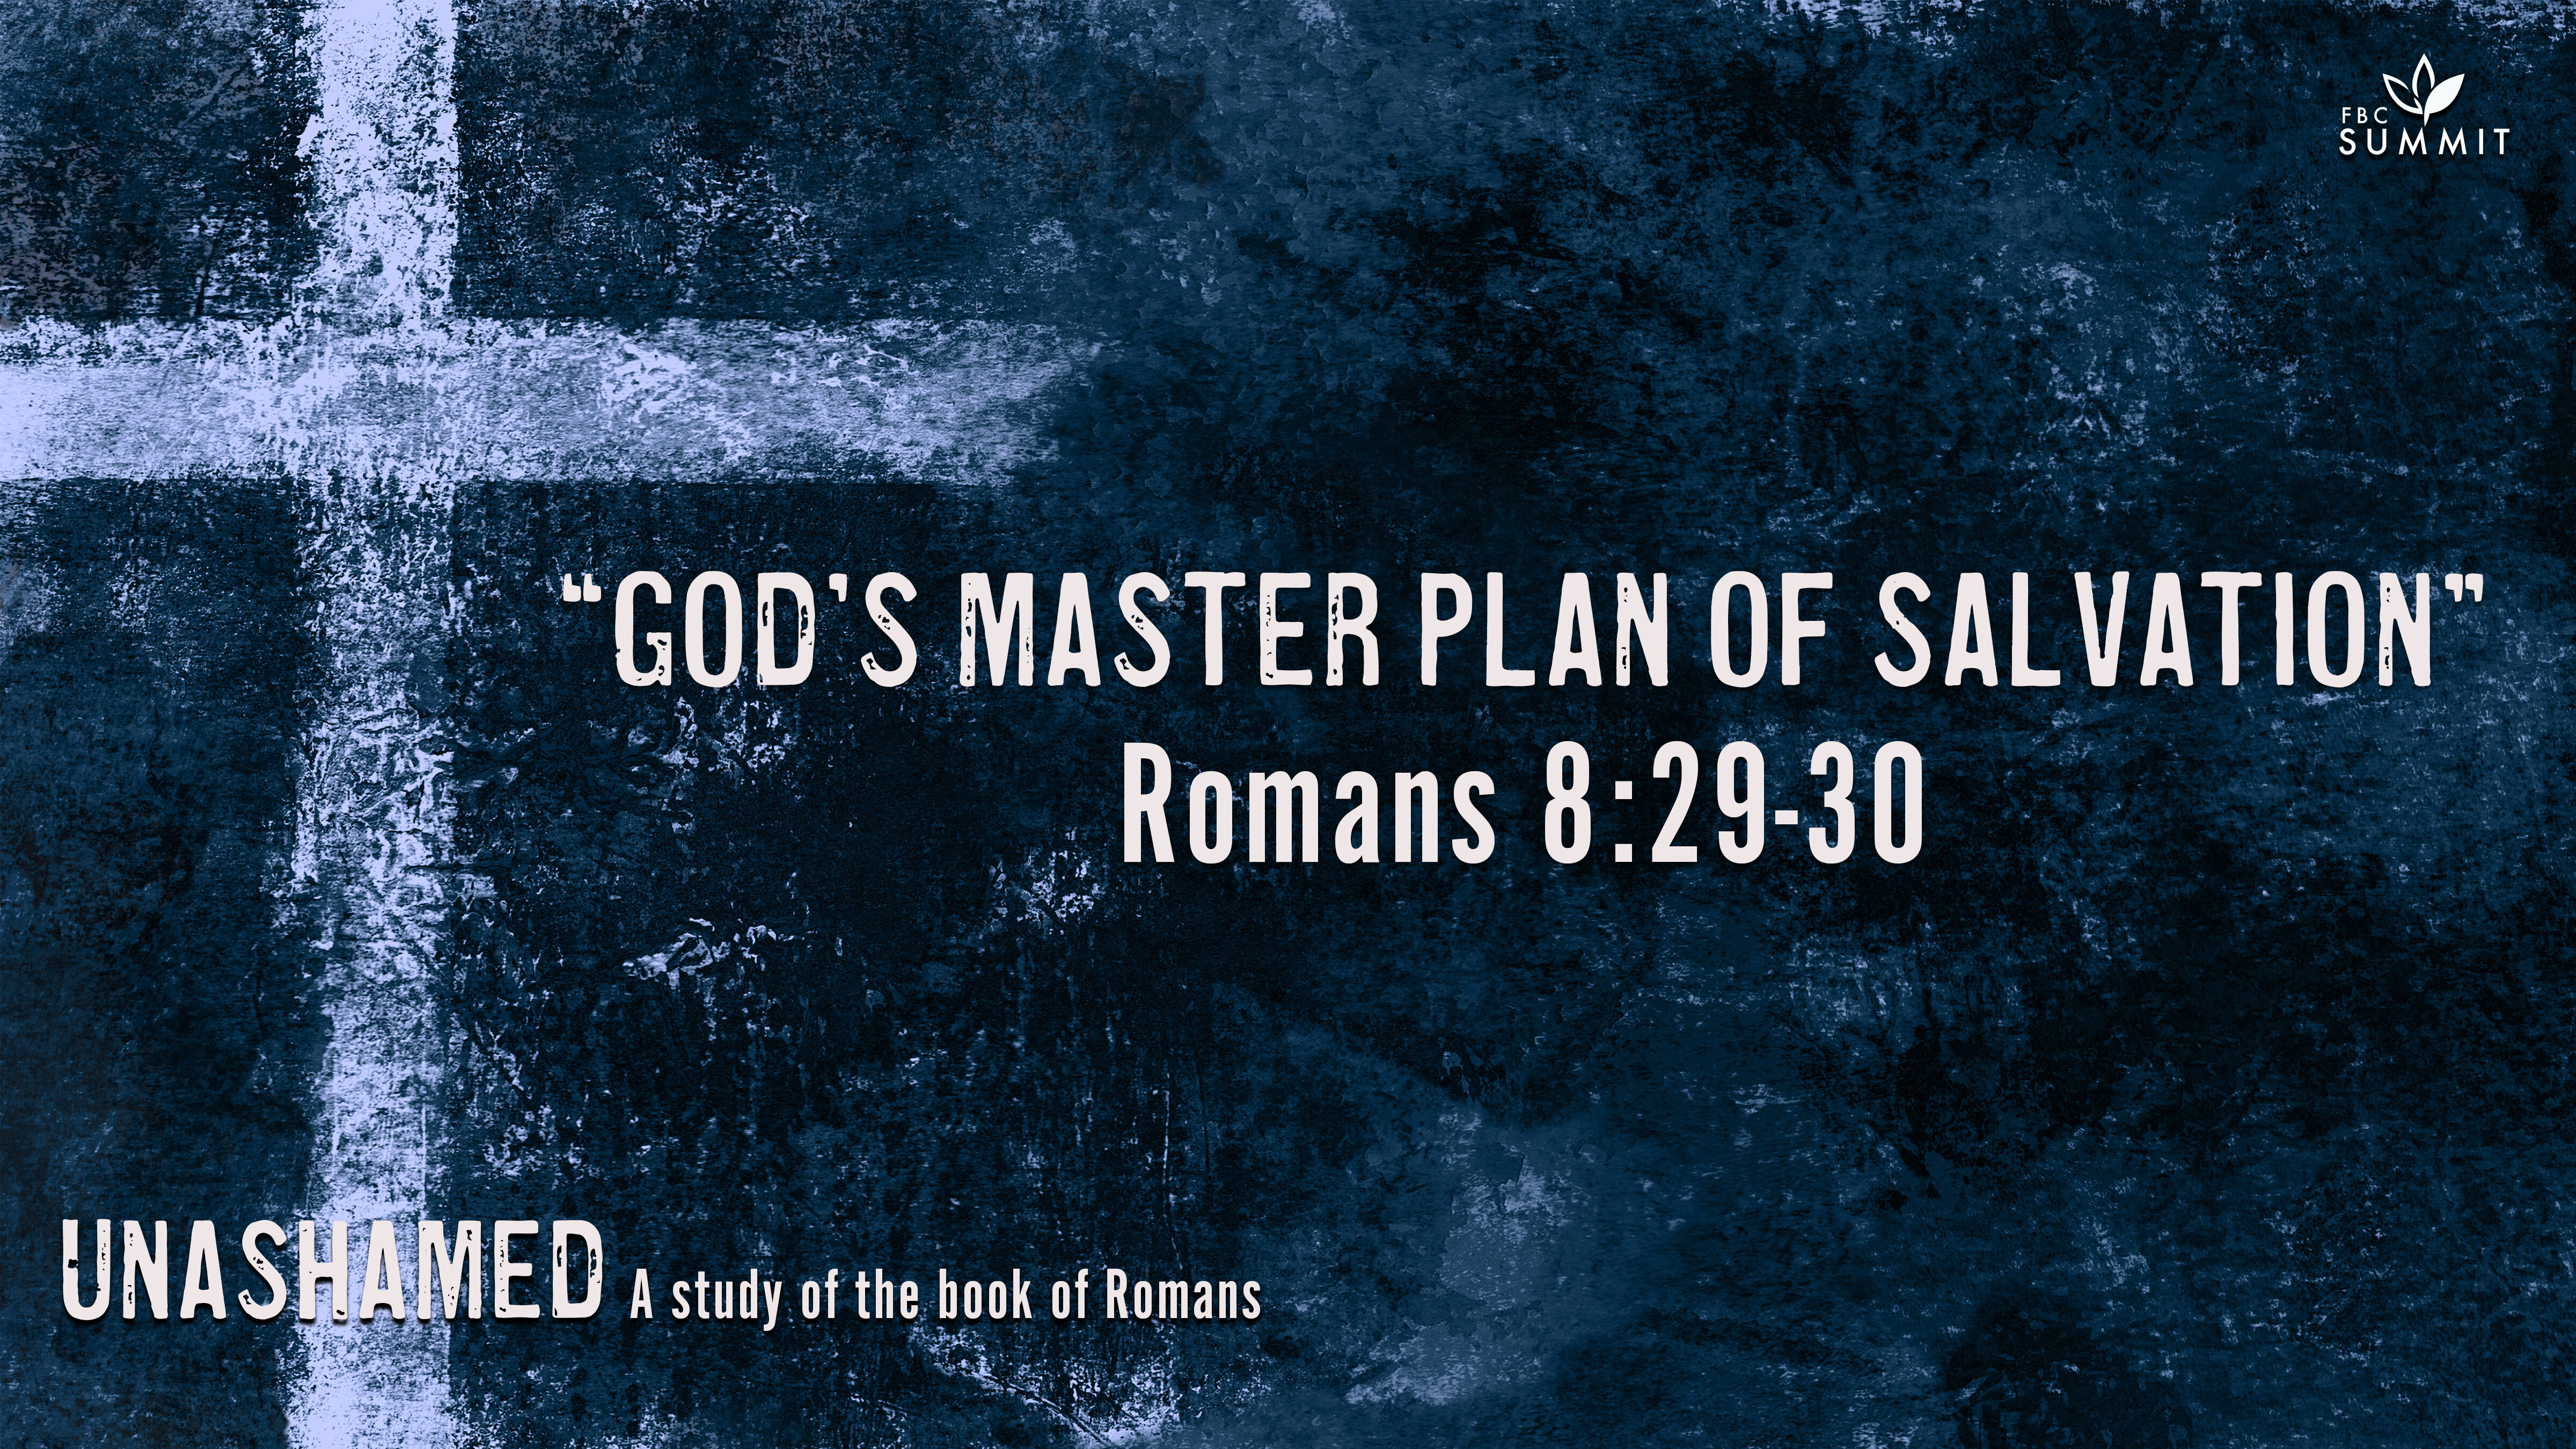 "God's Master Plan of Salvation" Romans 8:29-30